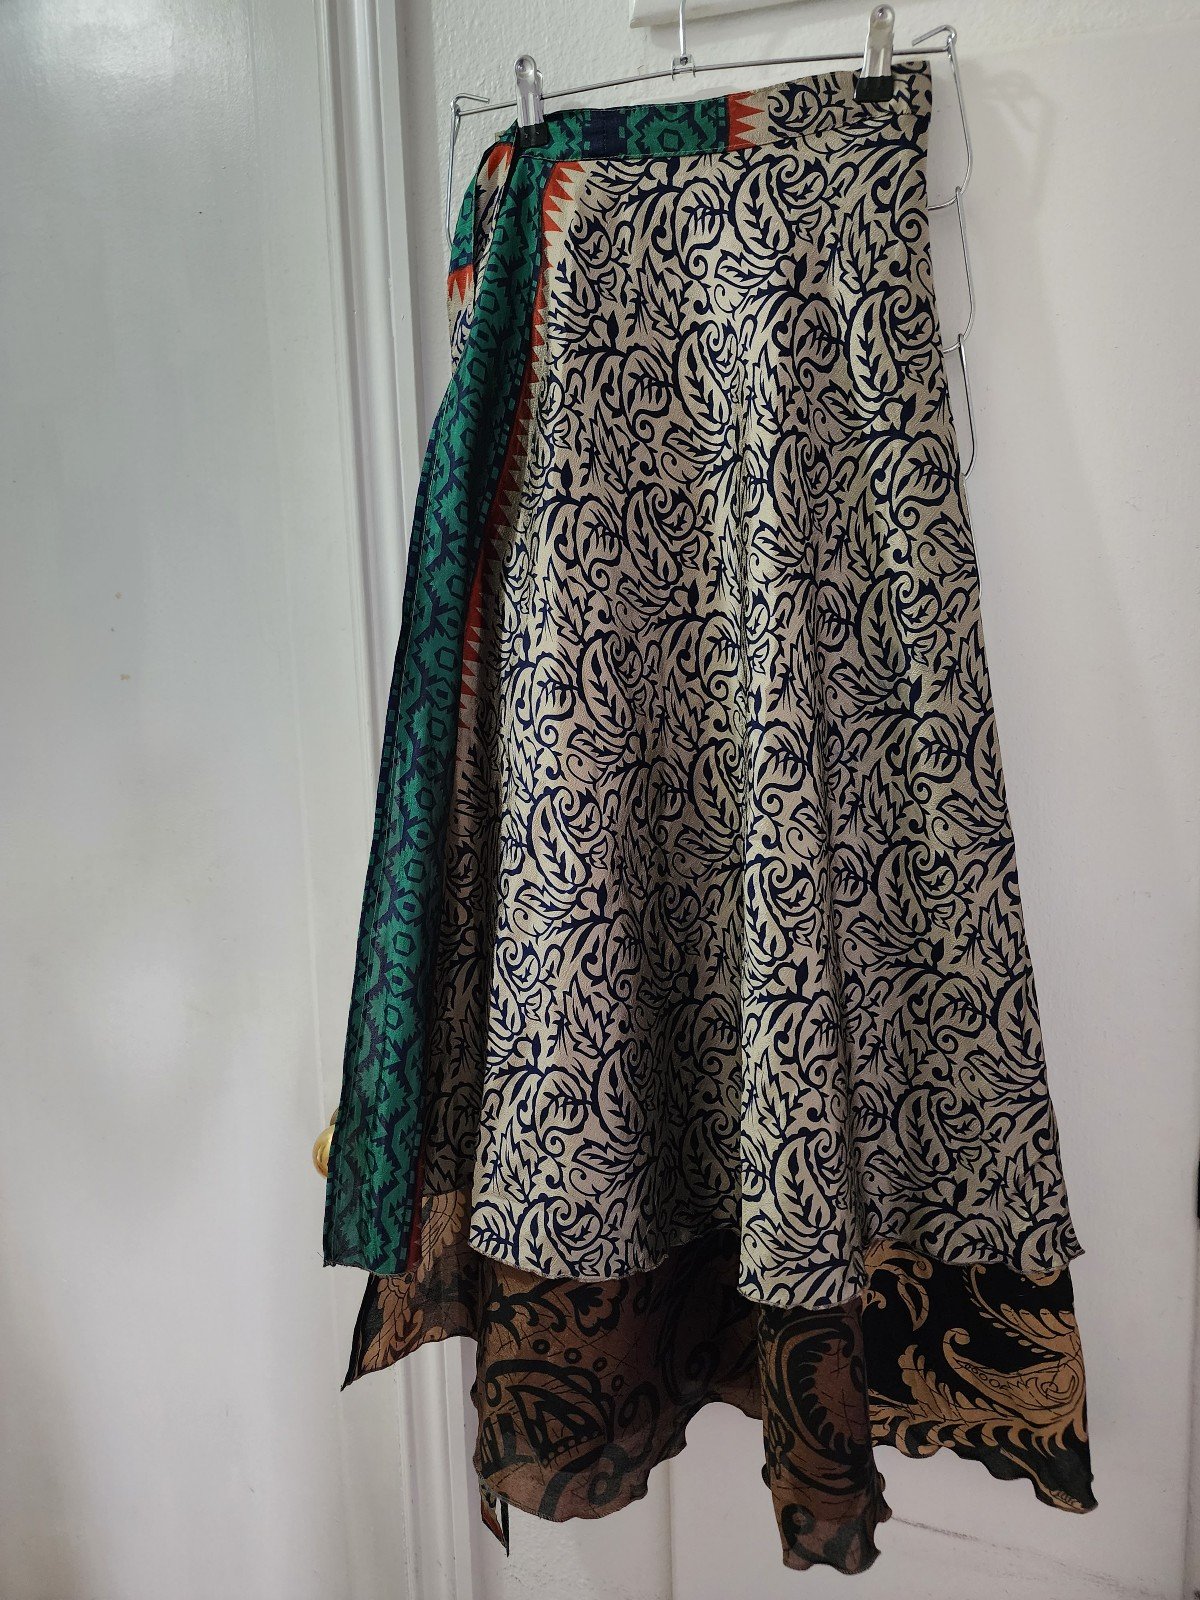 The Best Seller Recycled Sari Wrap Skirt JIUMB8zU3 best sale